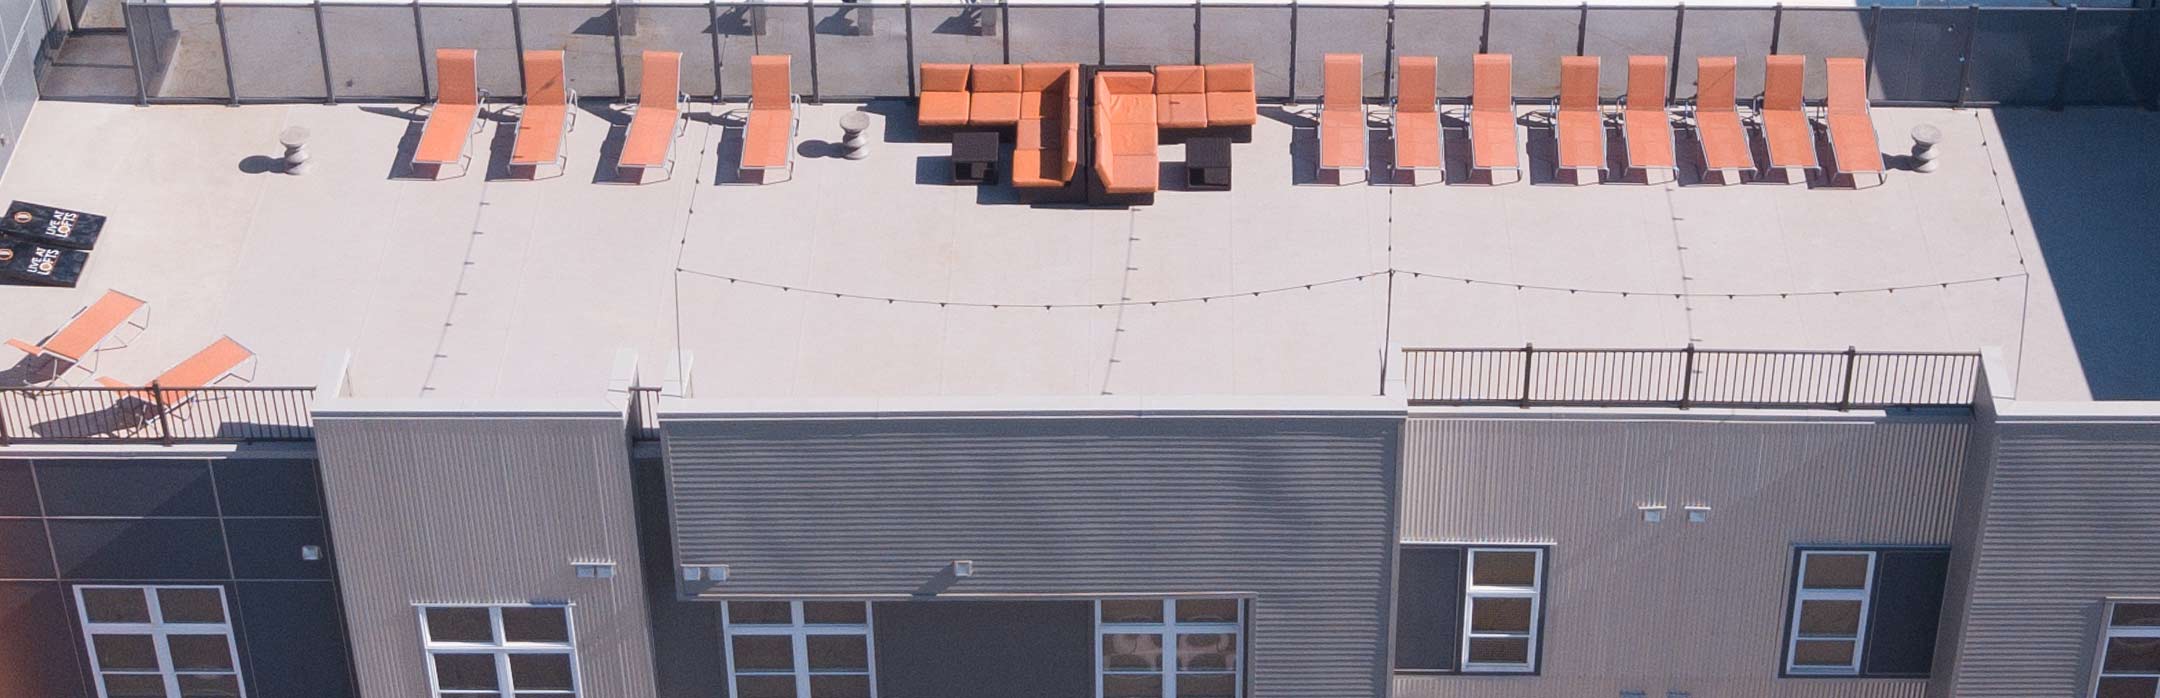 Commercial Roof Deck Waterproof Vinyl Decking - Duradek